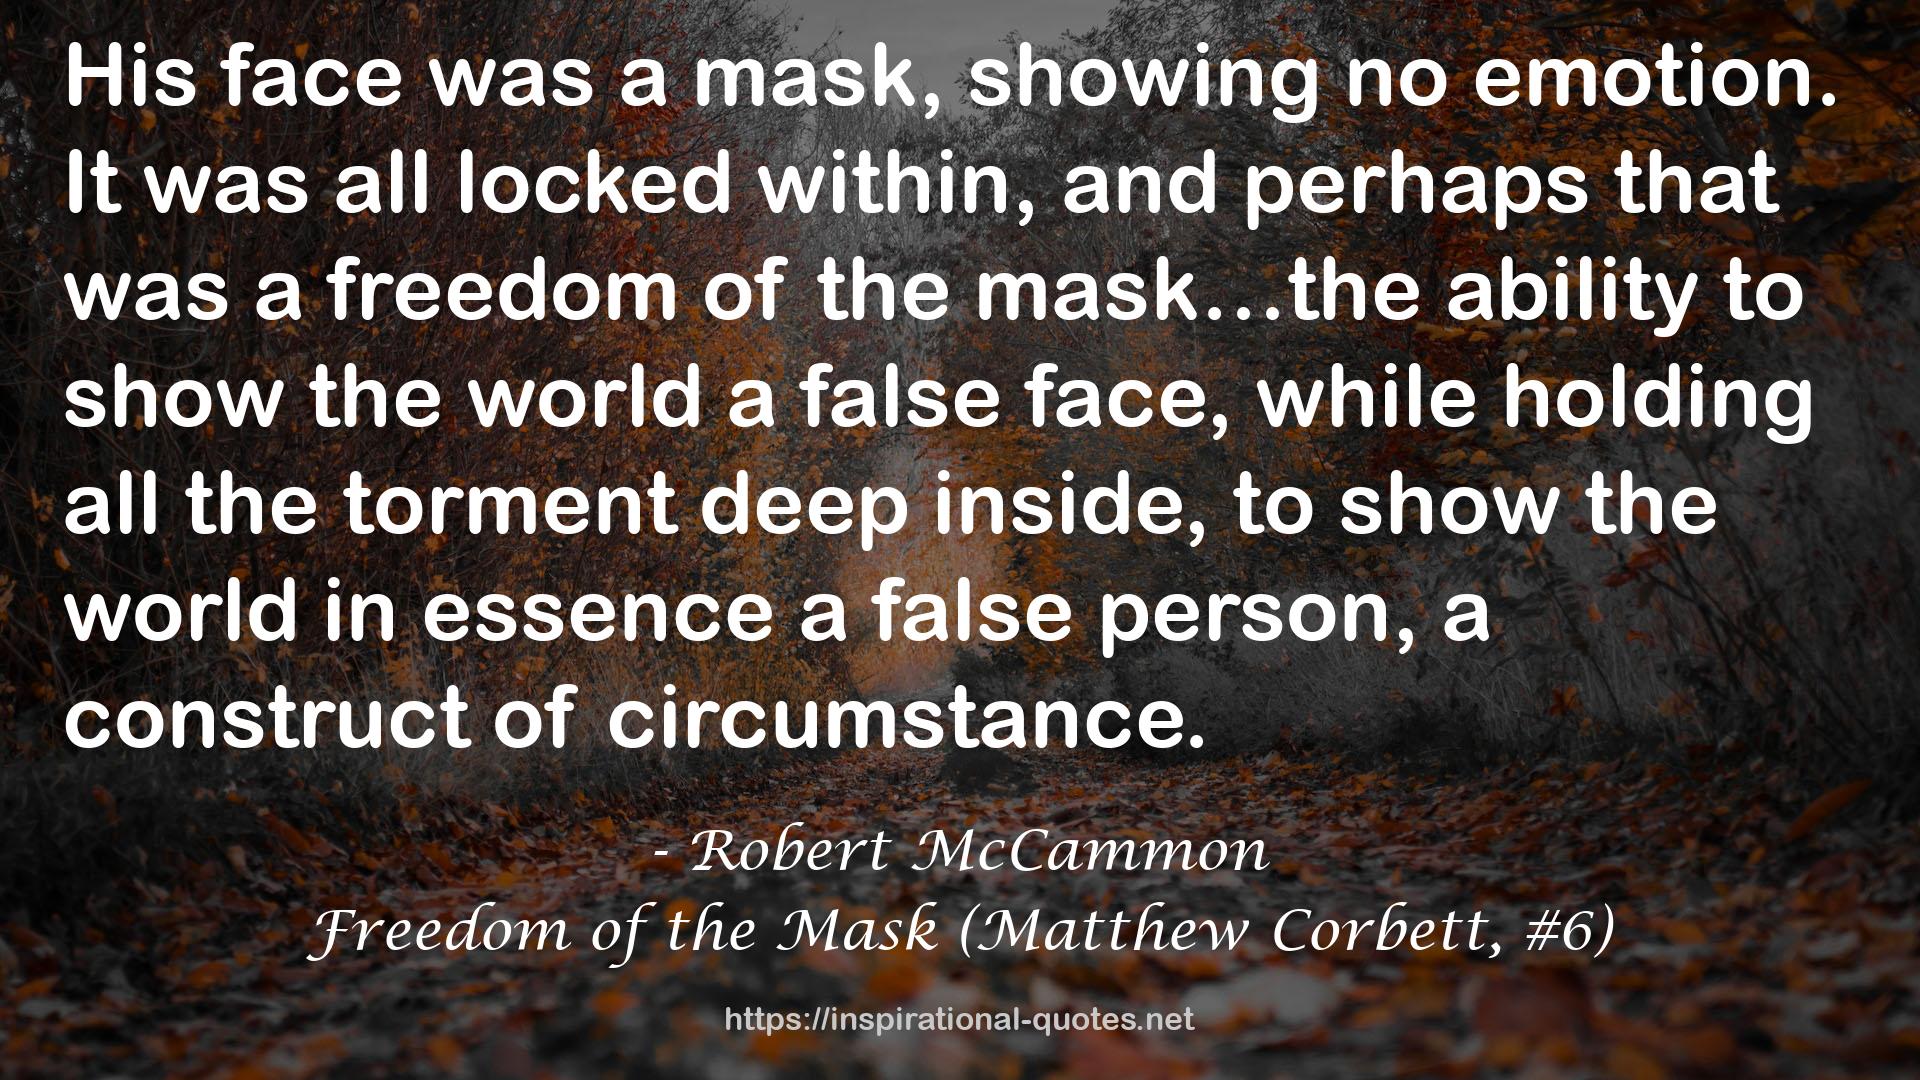 Freedom of the Mask (Matthew Corbett, #6) QUOTES